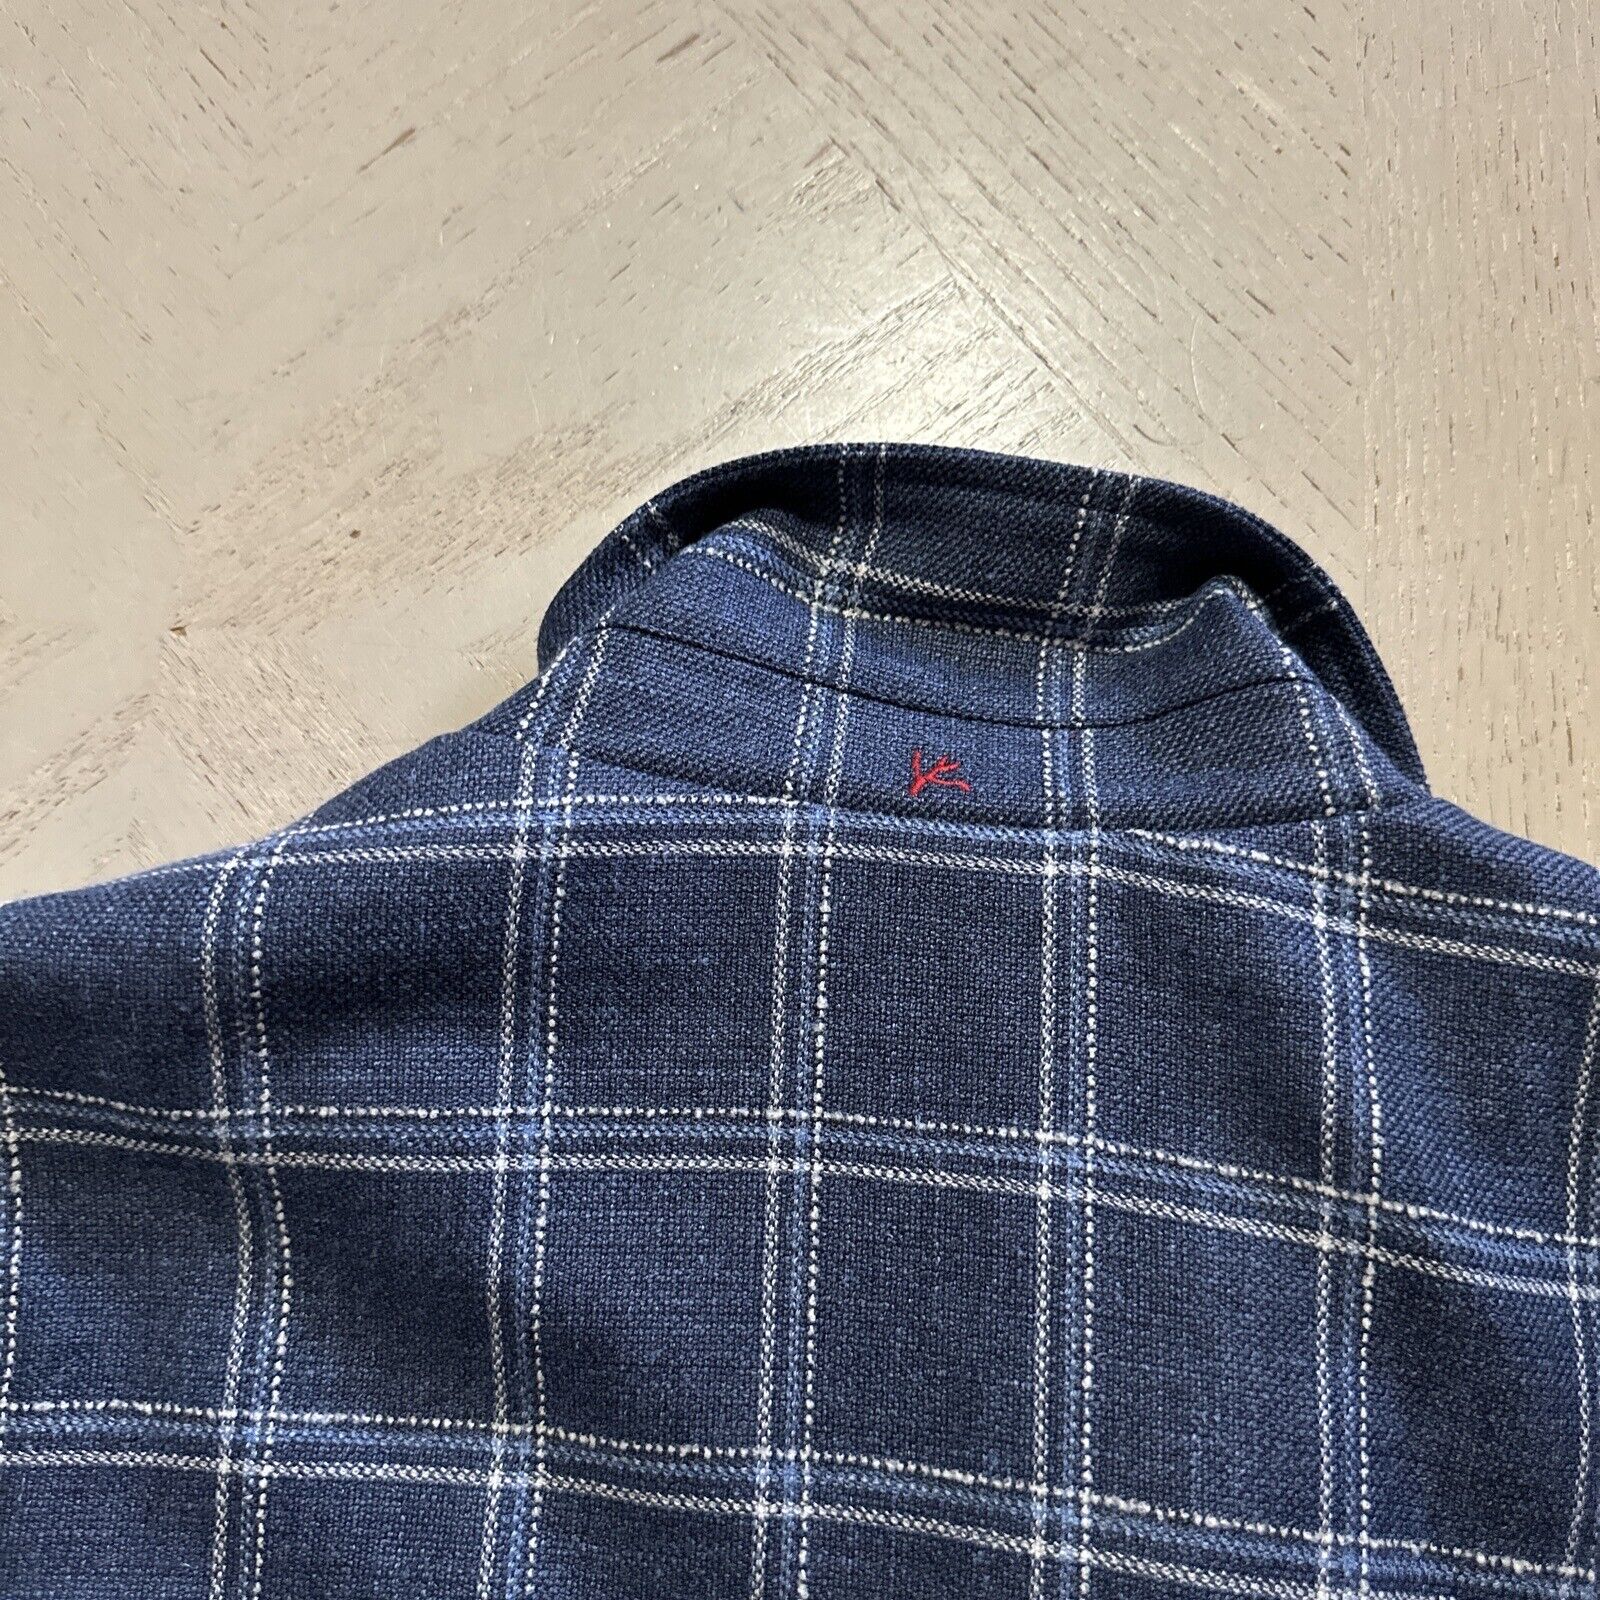 New $2750 Isaia Portofino Plaid Wool Blend Shirt Jacket Blue 40 US/50 Eu Italy